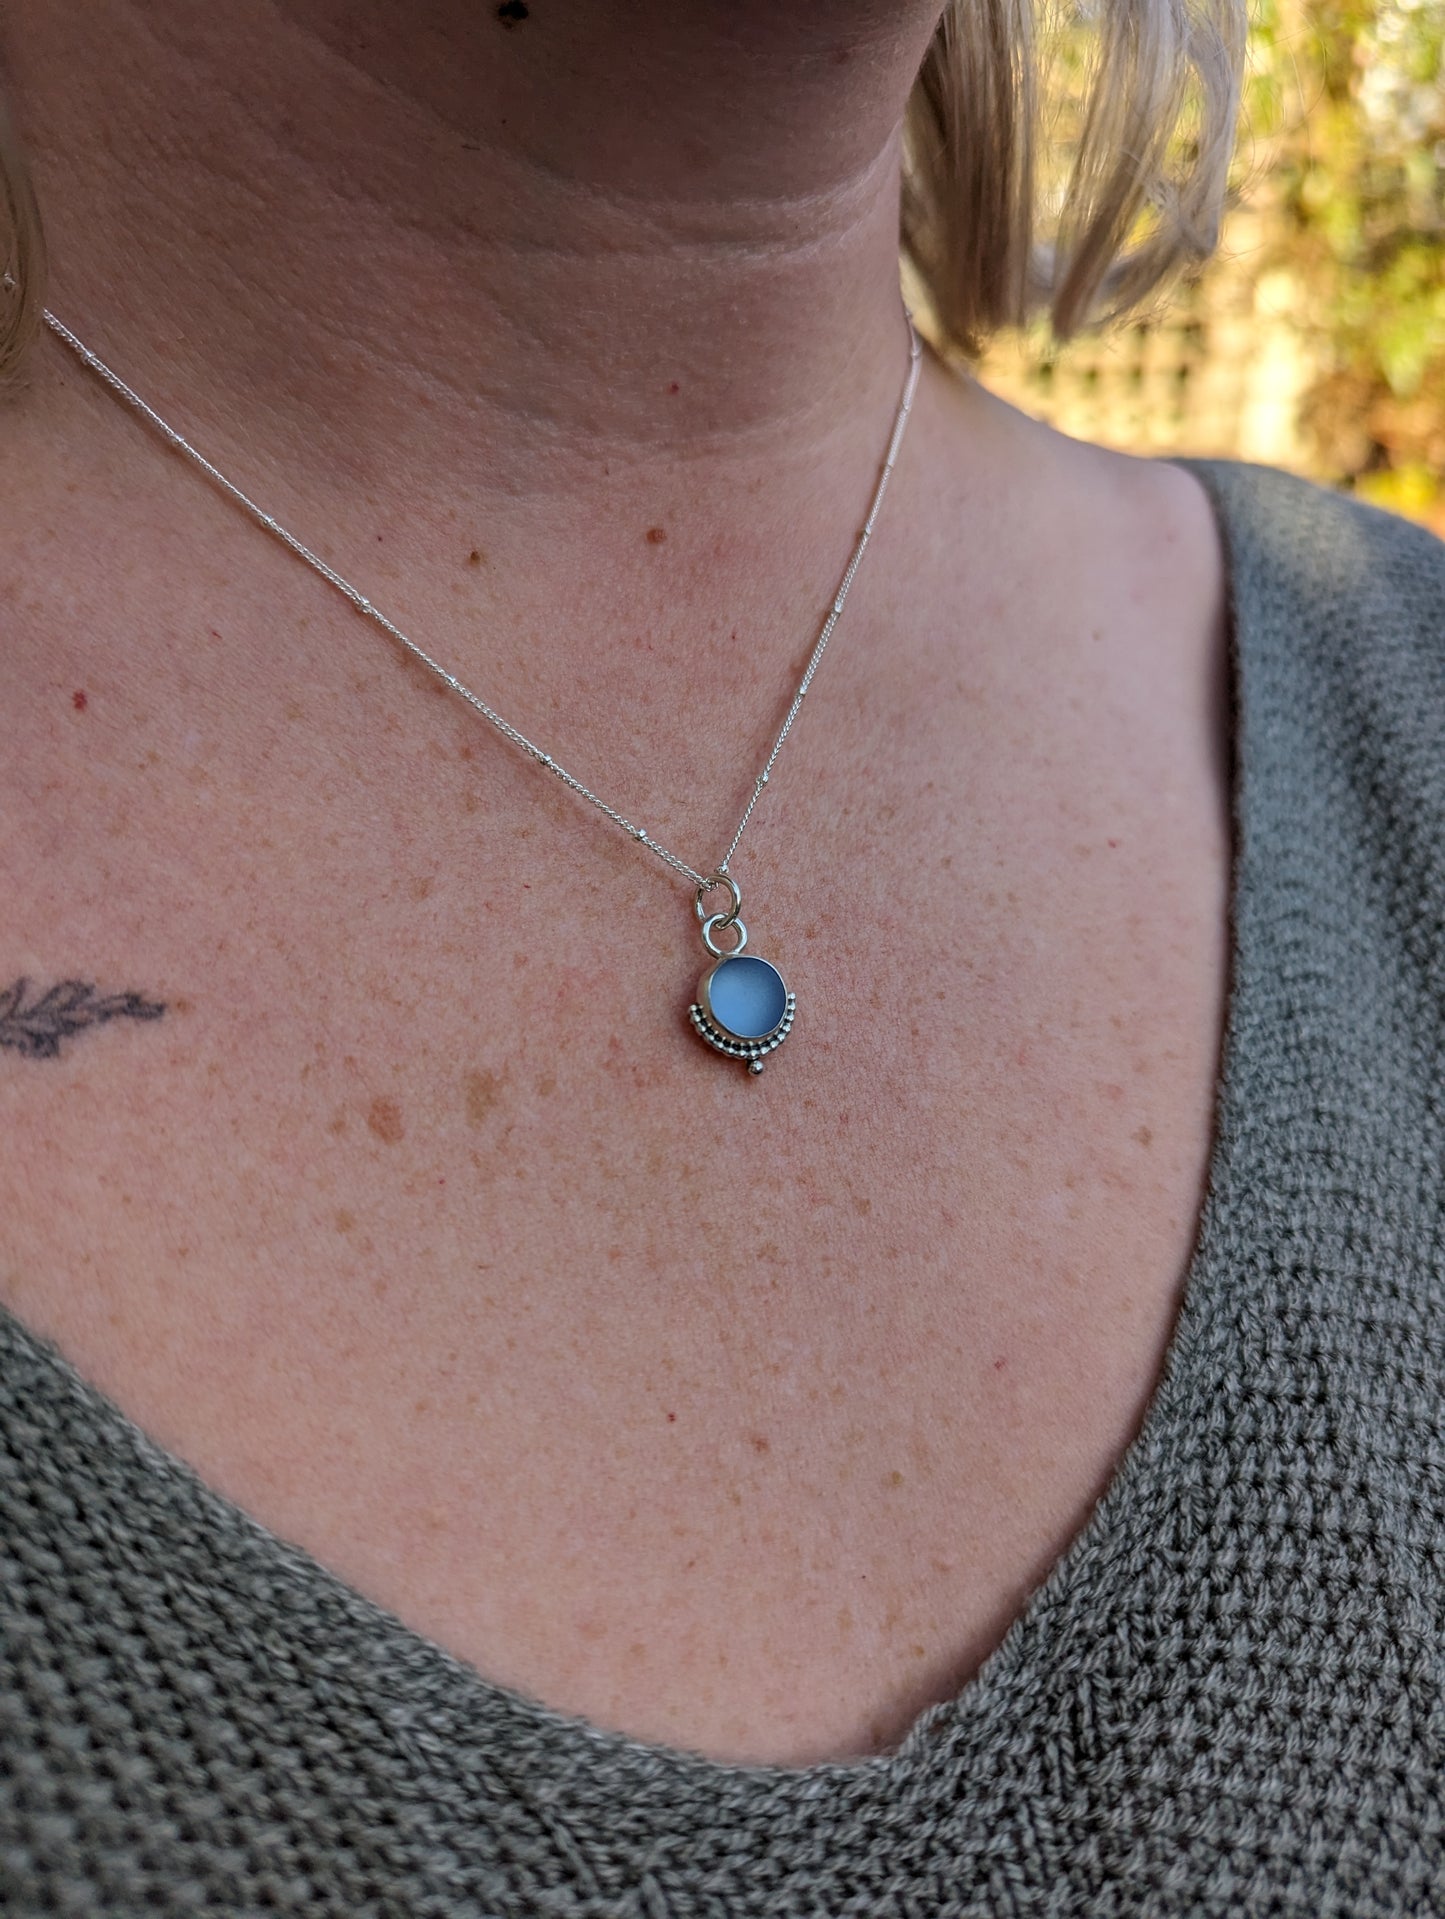 Cornflower blue seaglass necklace